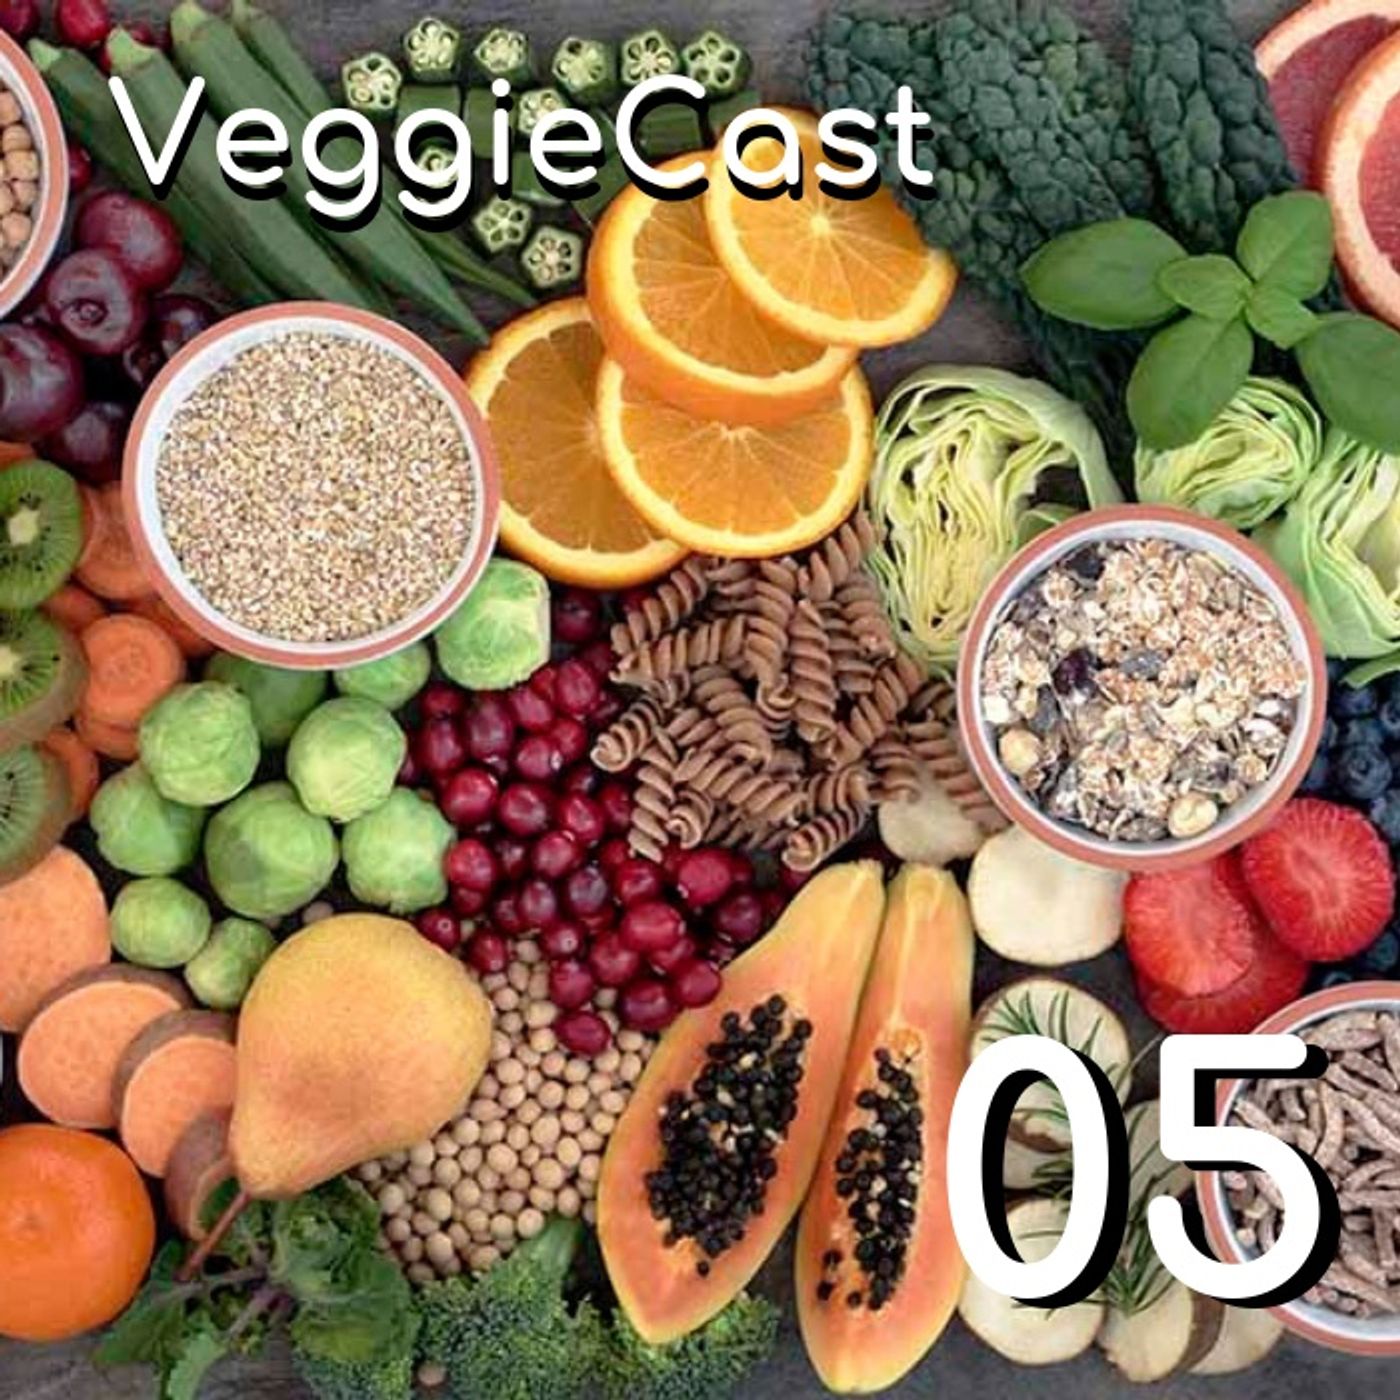 #05 Carboidratos e o Vegetarianismo